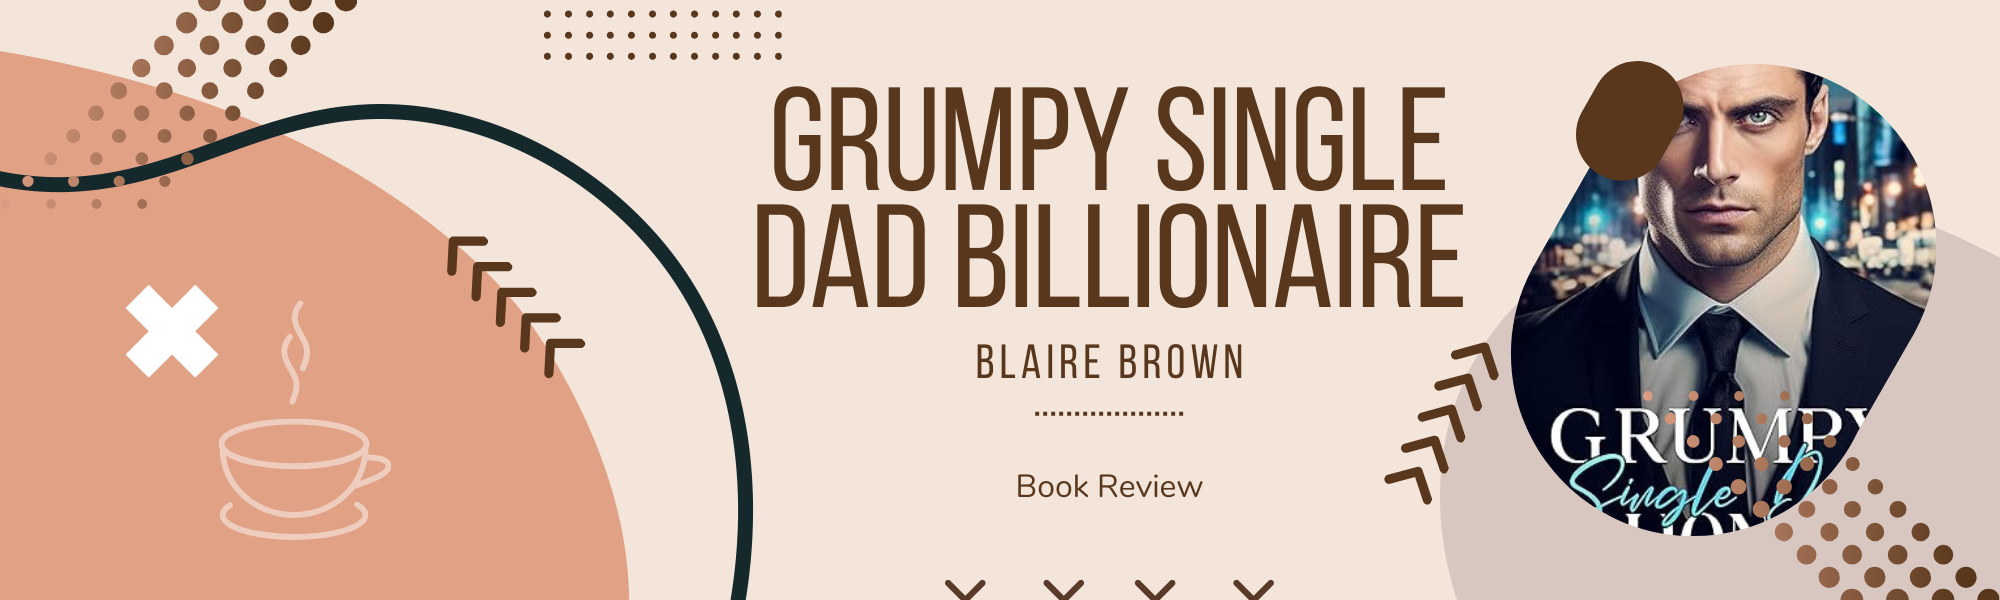 Book Review – ‘Grumpy Single Dad Billionaire’ by Blair Brown 